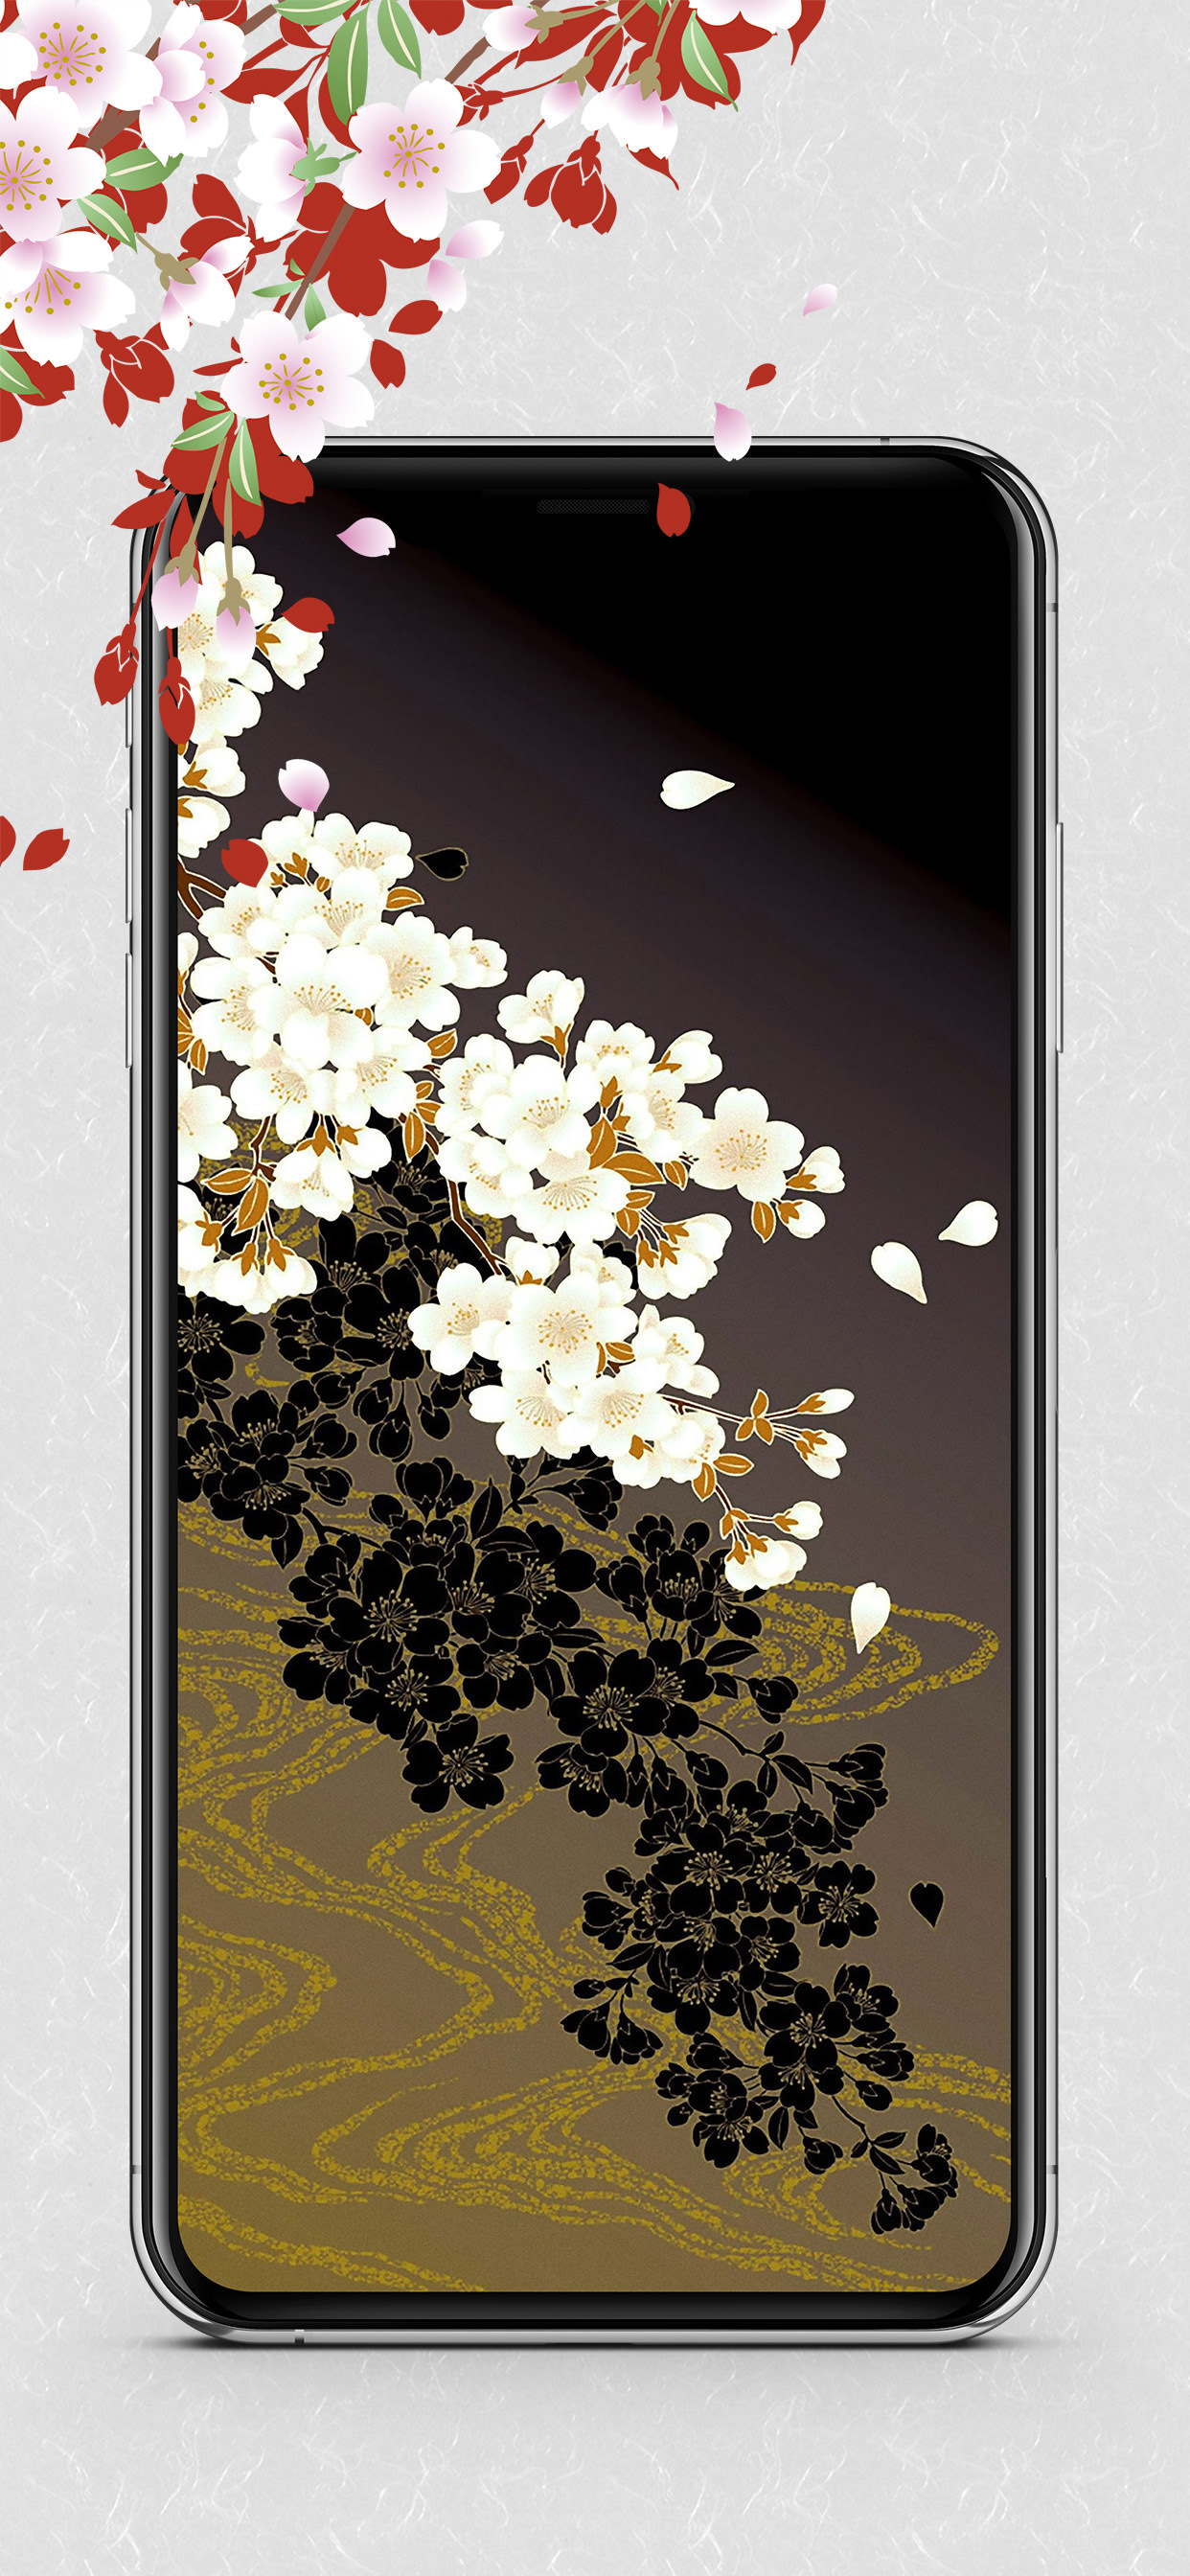 Dolice Design Masaki Hirokawa Portfolio 廣川政樹ポートフォリオ Iphone Android App Ukiyo E